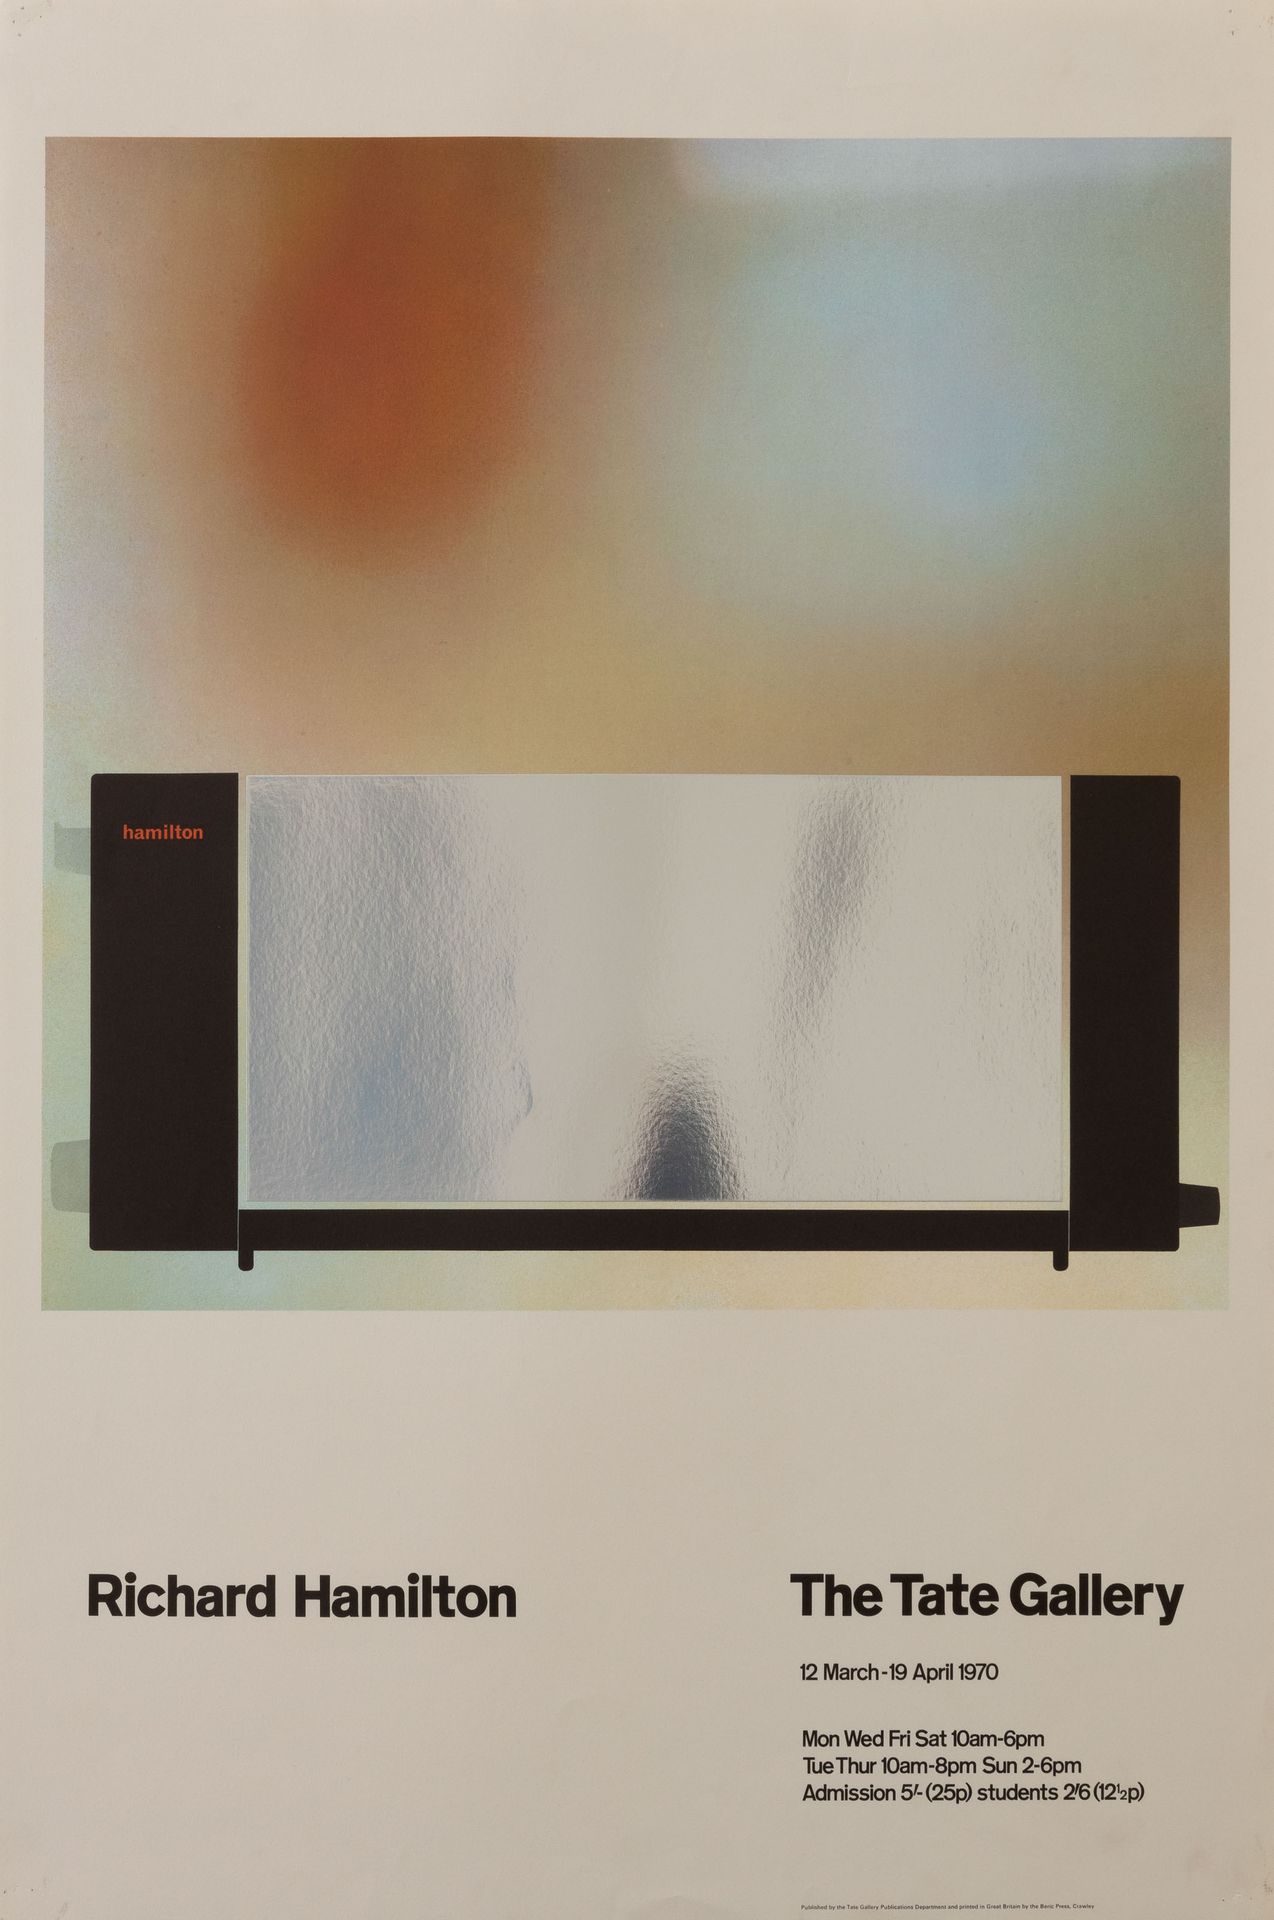 RICHARD HAMILTON (1922-2011) 展览海报。伦敦，泰特画廊，1970年。


有绘图针孔。状况良好。

760 x 510 mm